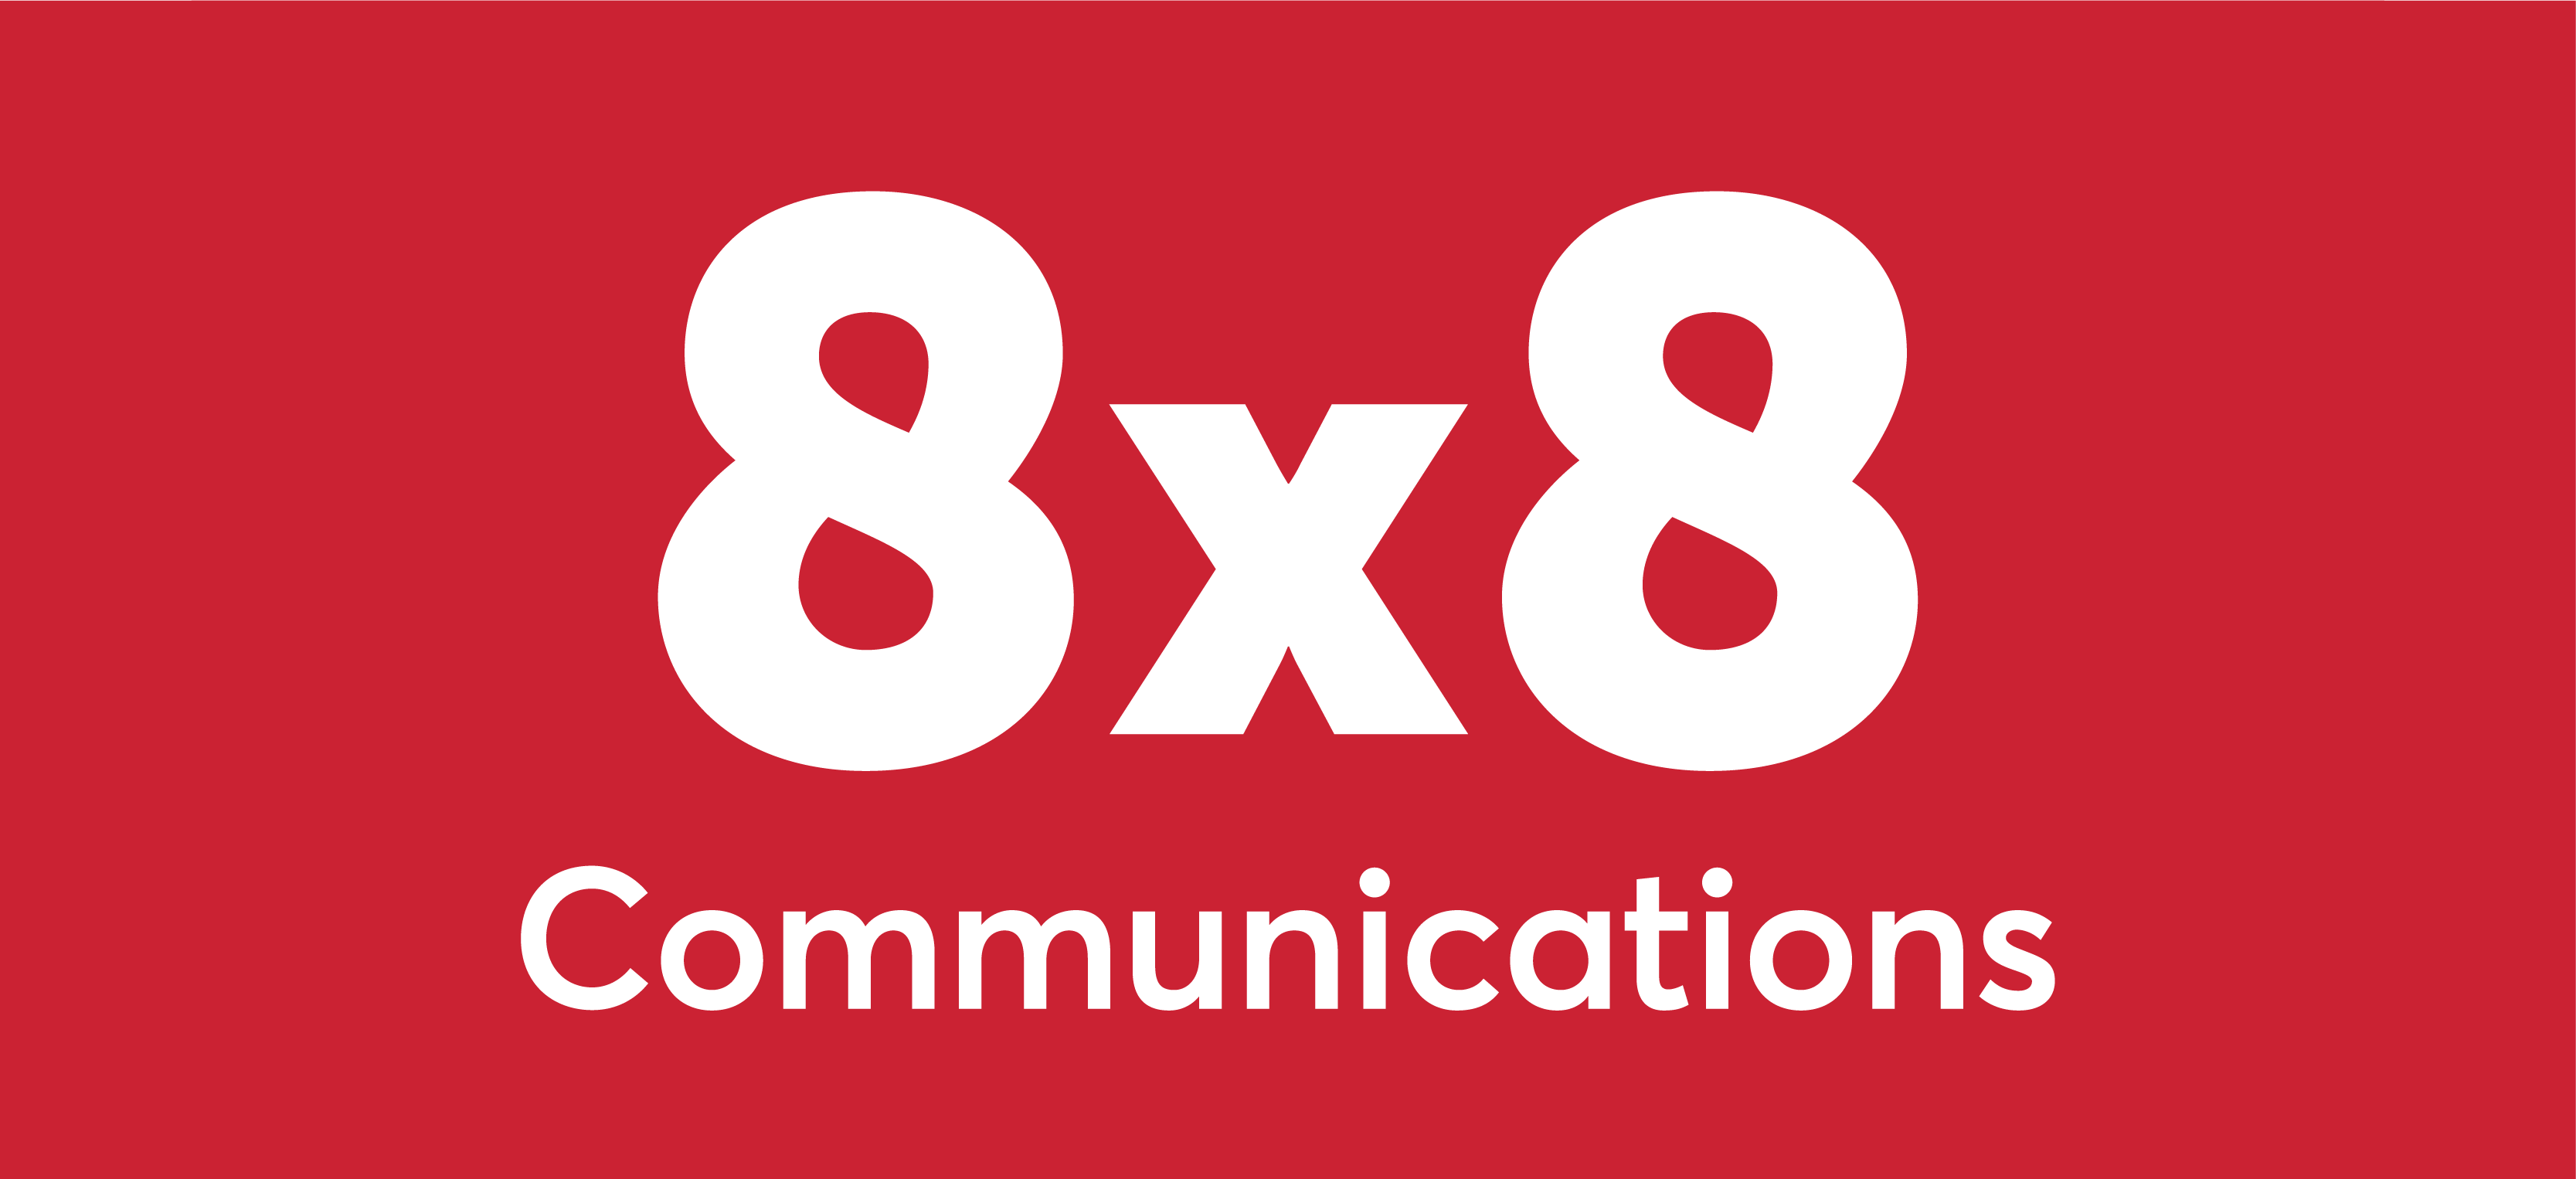 8x8 logo booth